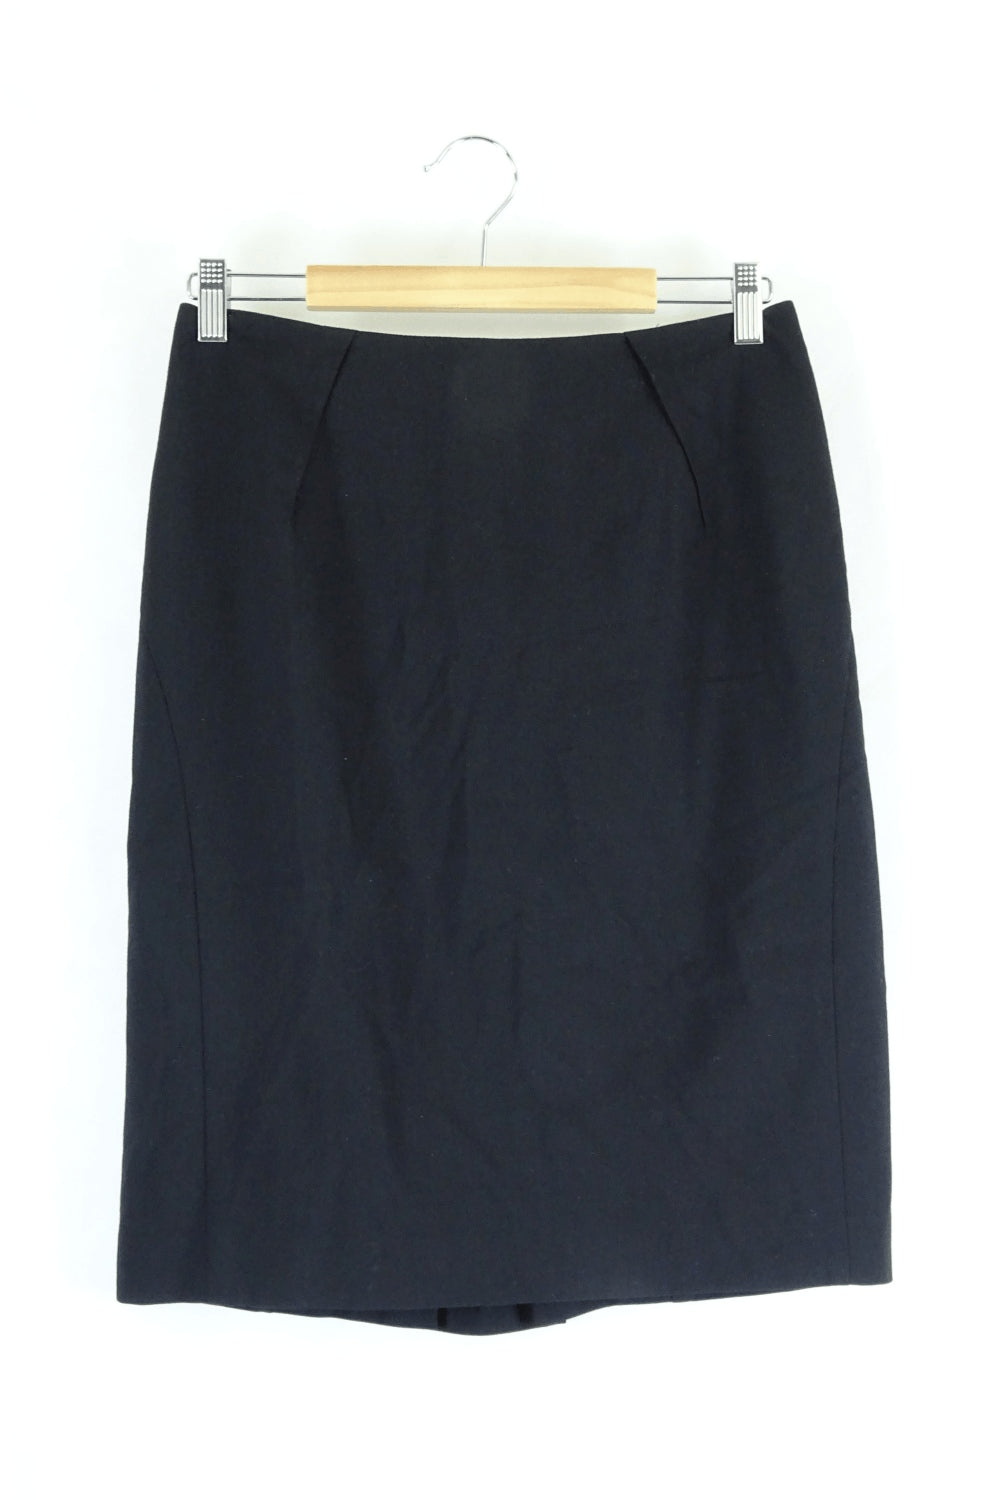 Veronika Maine Black Pencil Skirt 10